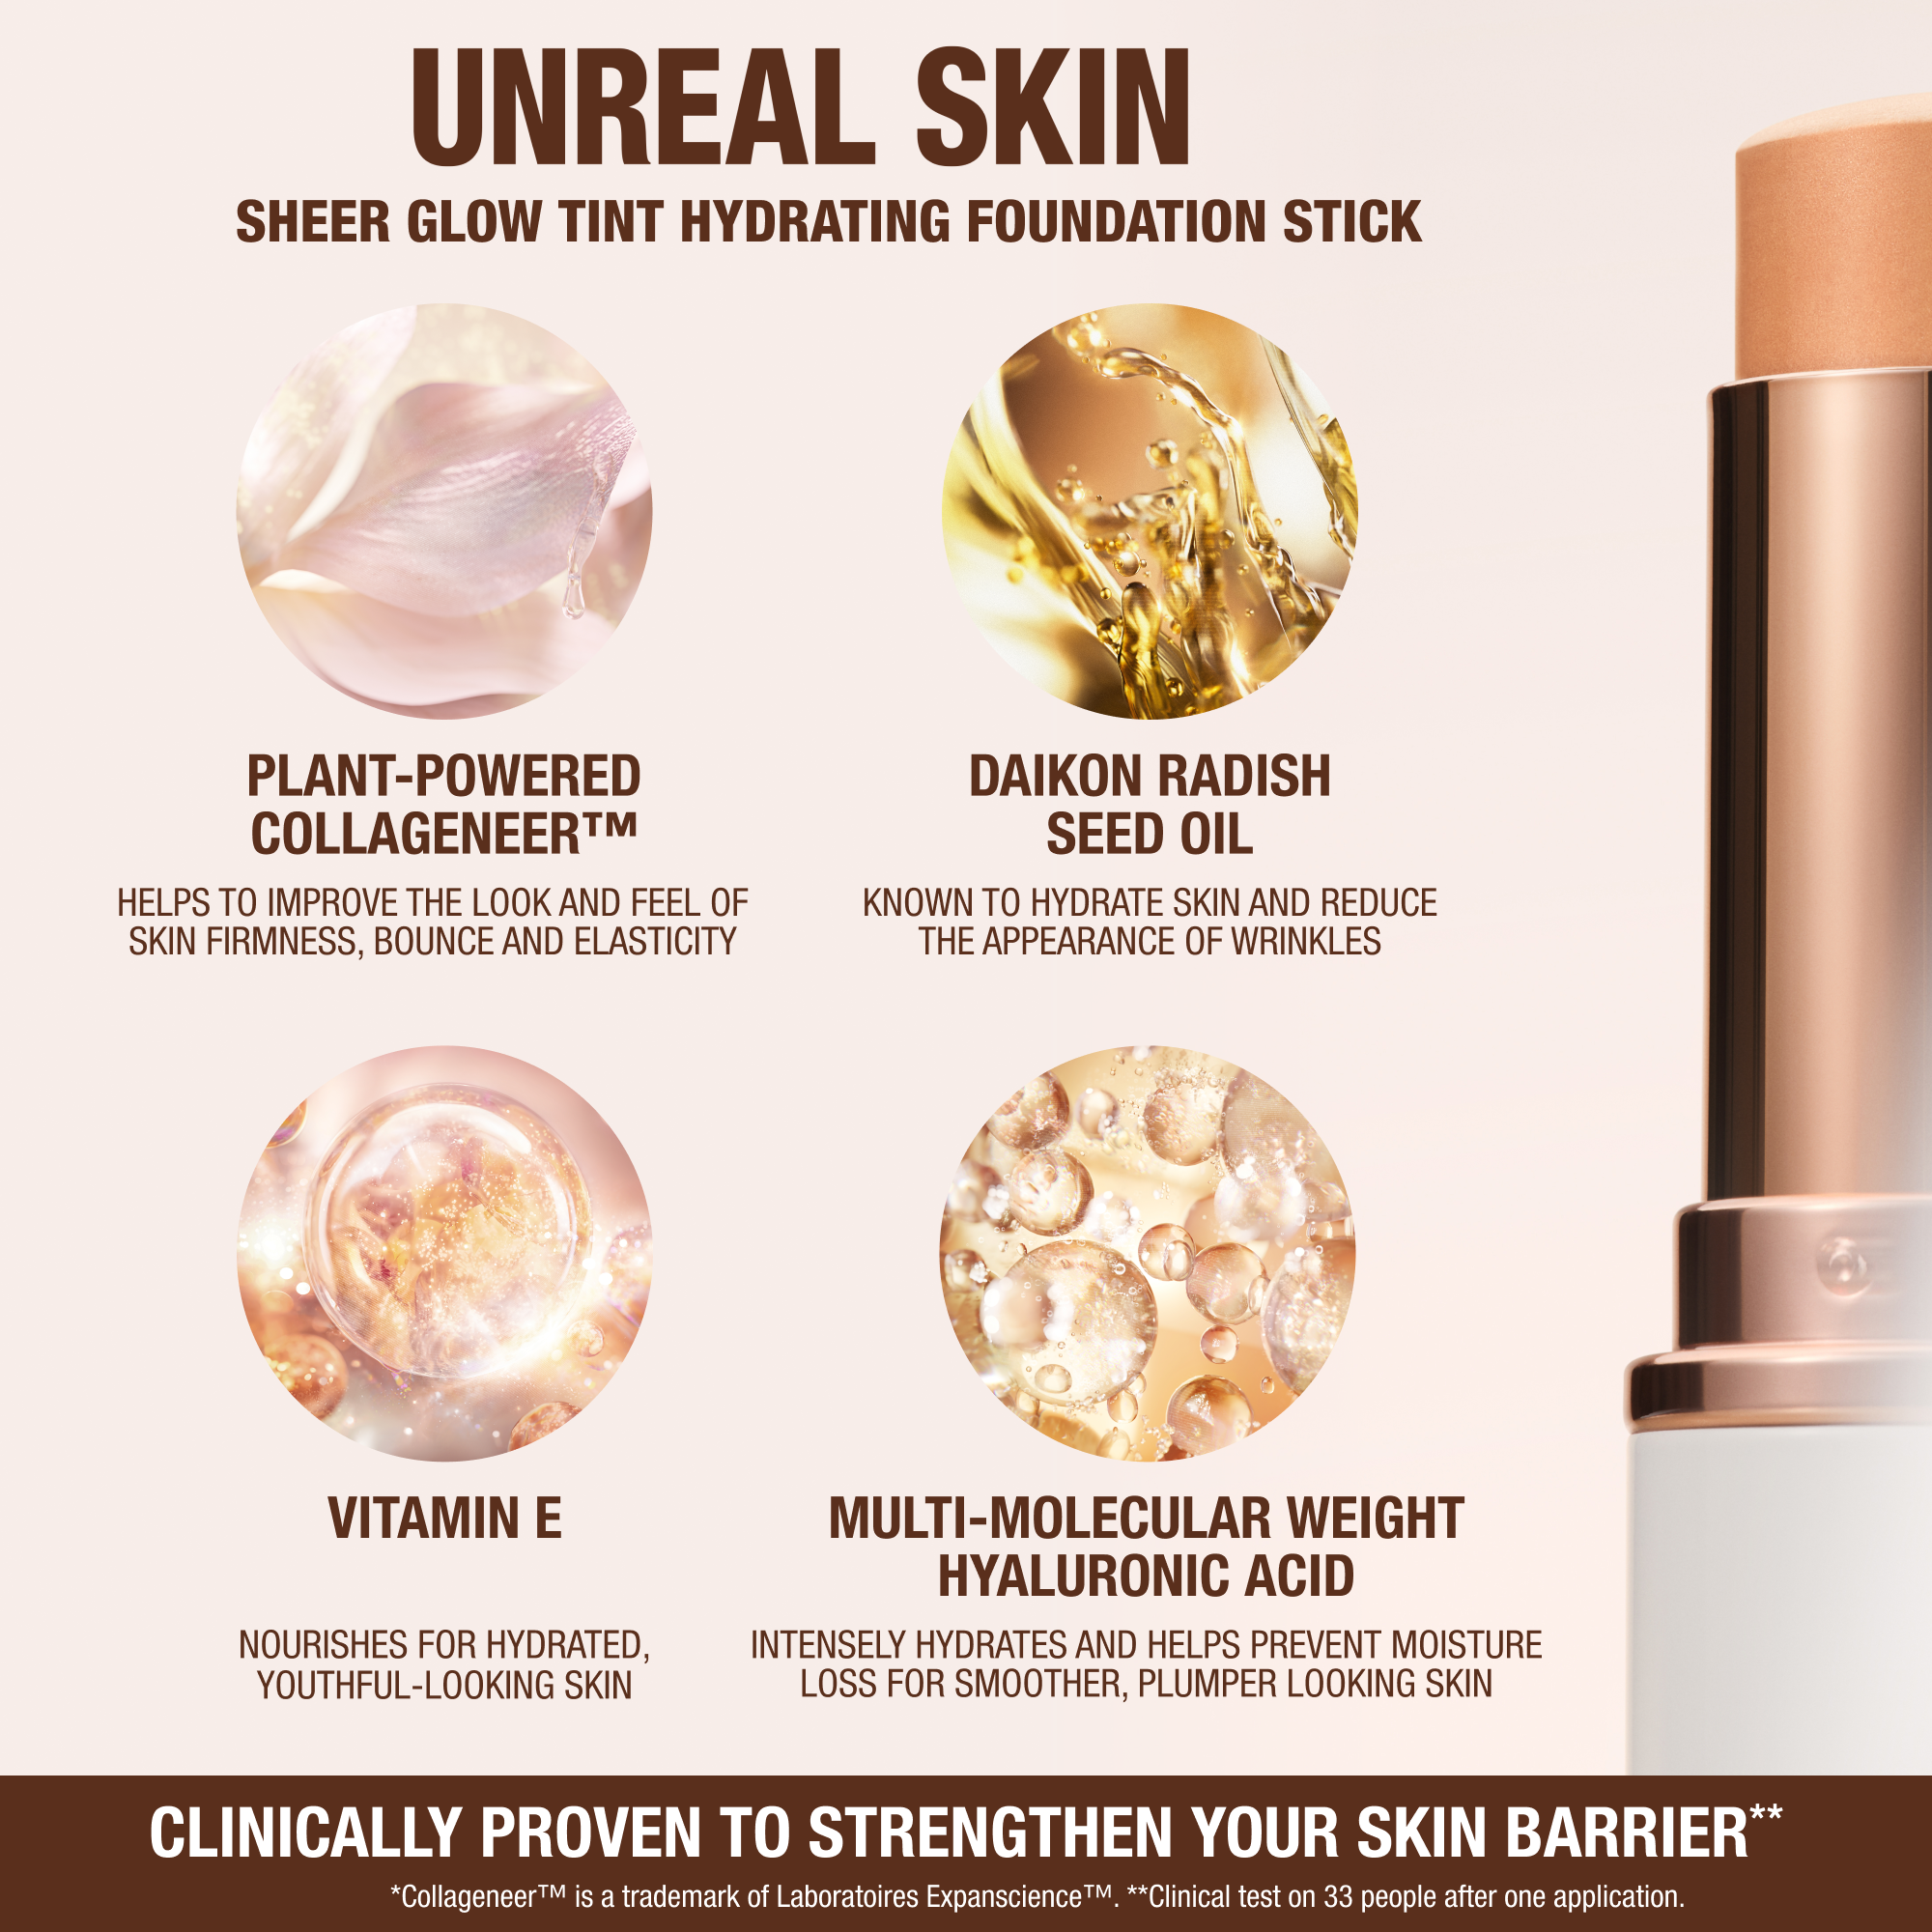 Unreal Skin Foundation ingredients